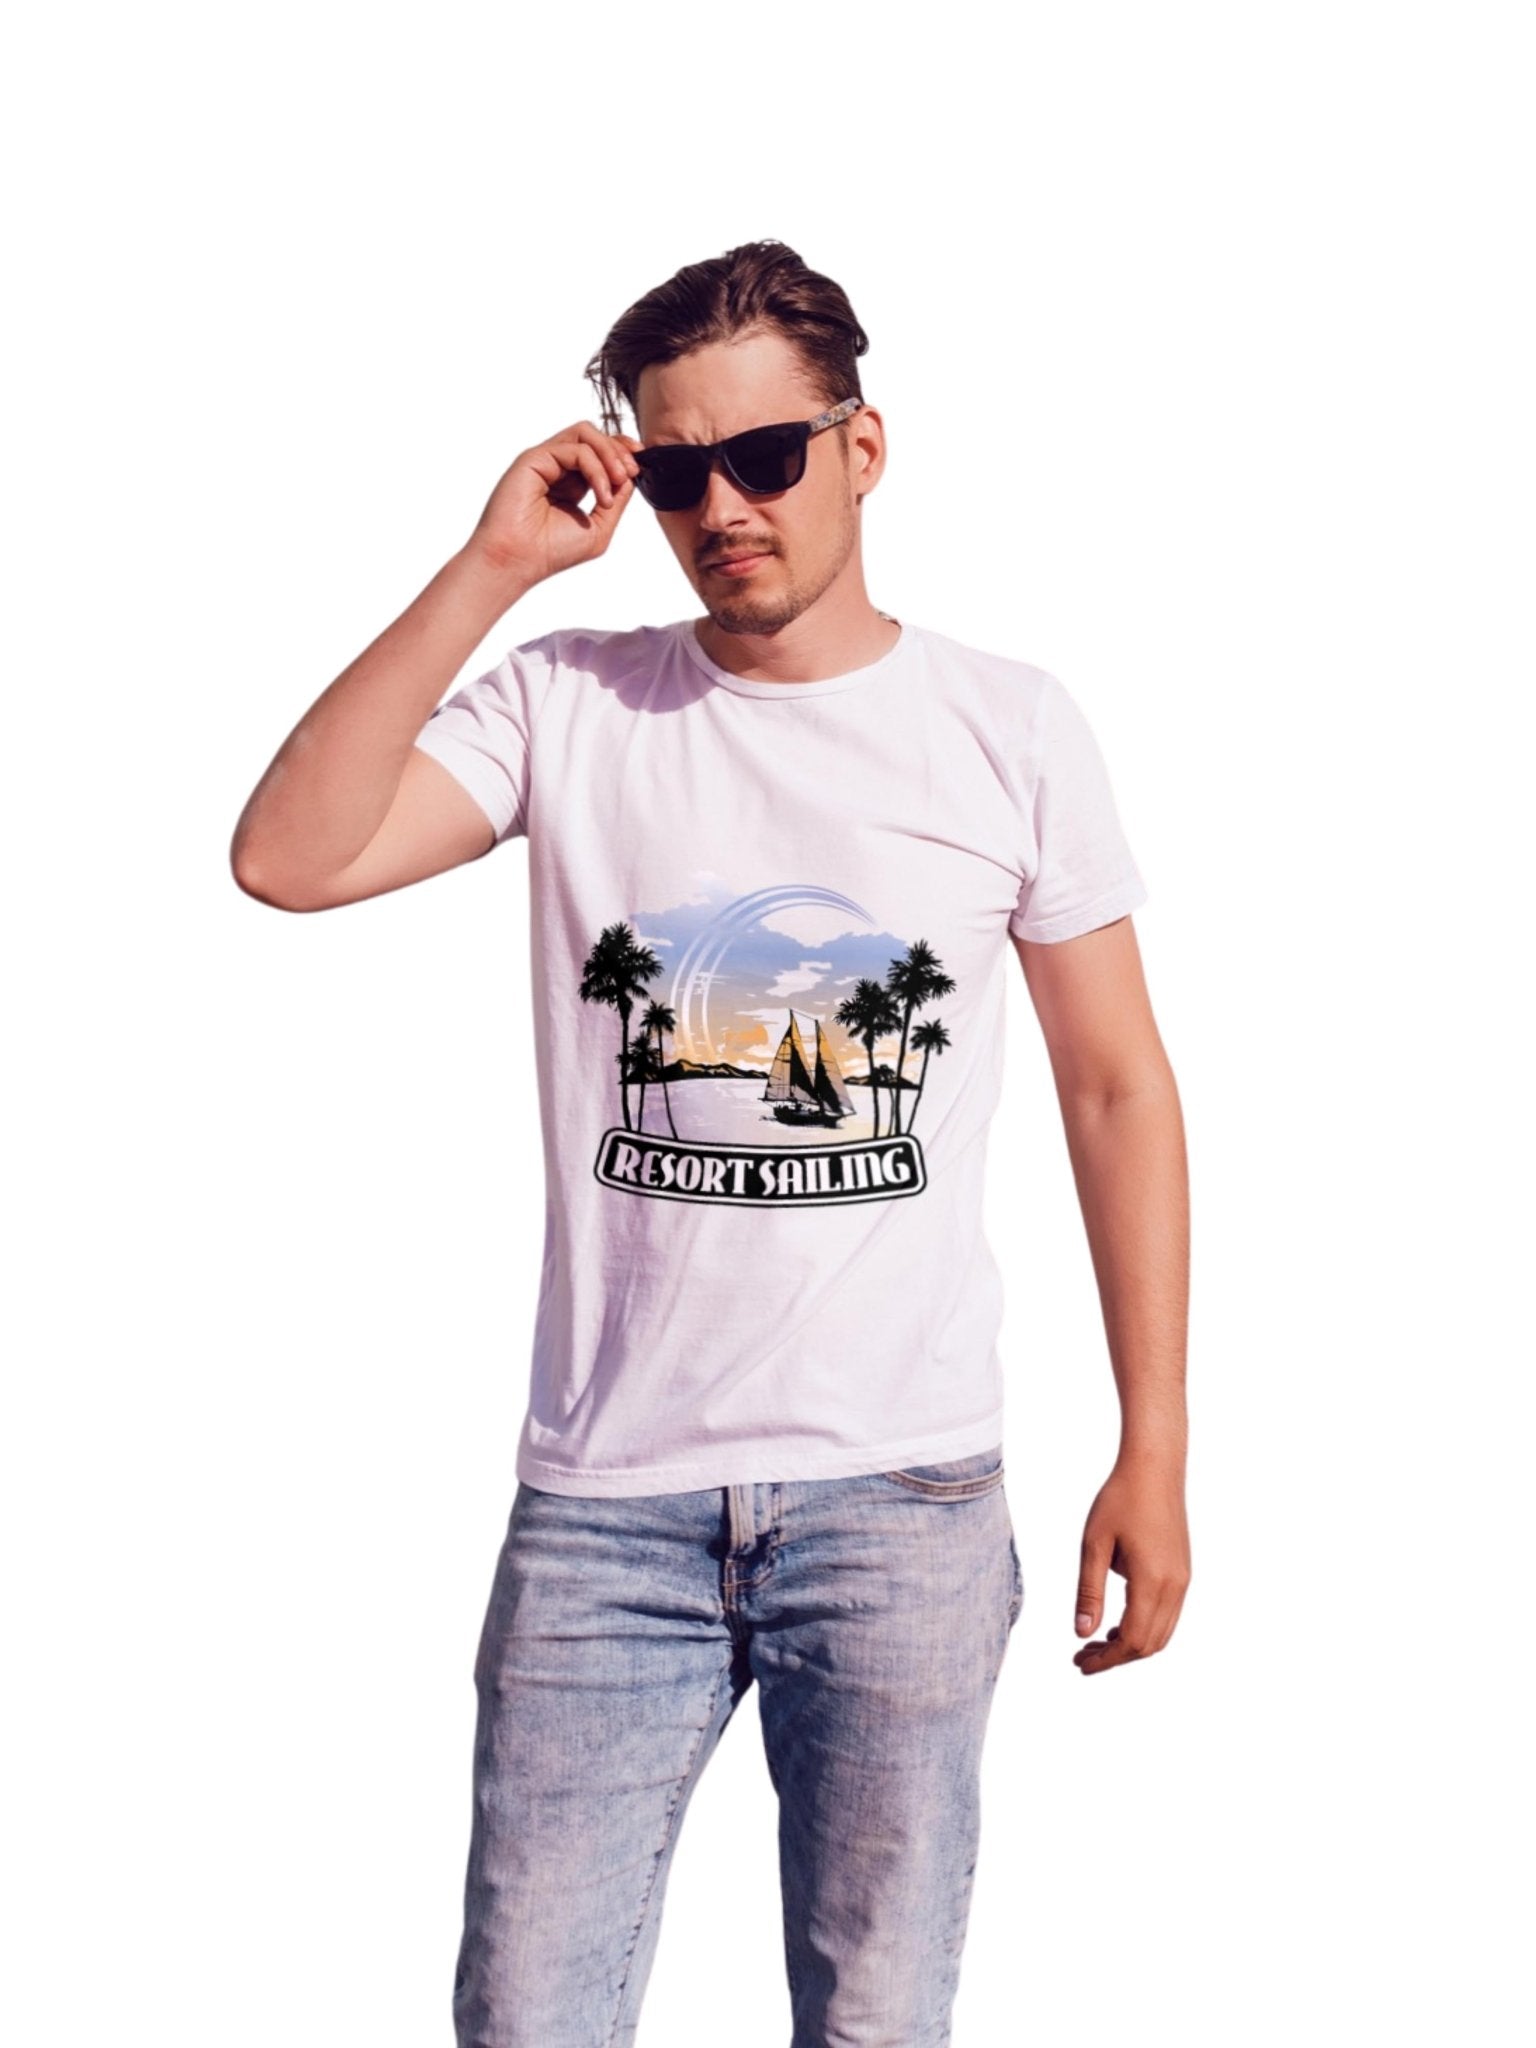 Resort Sailing Regular Men's T-Shirt - Hush and Wear